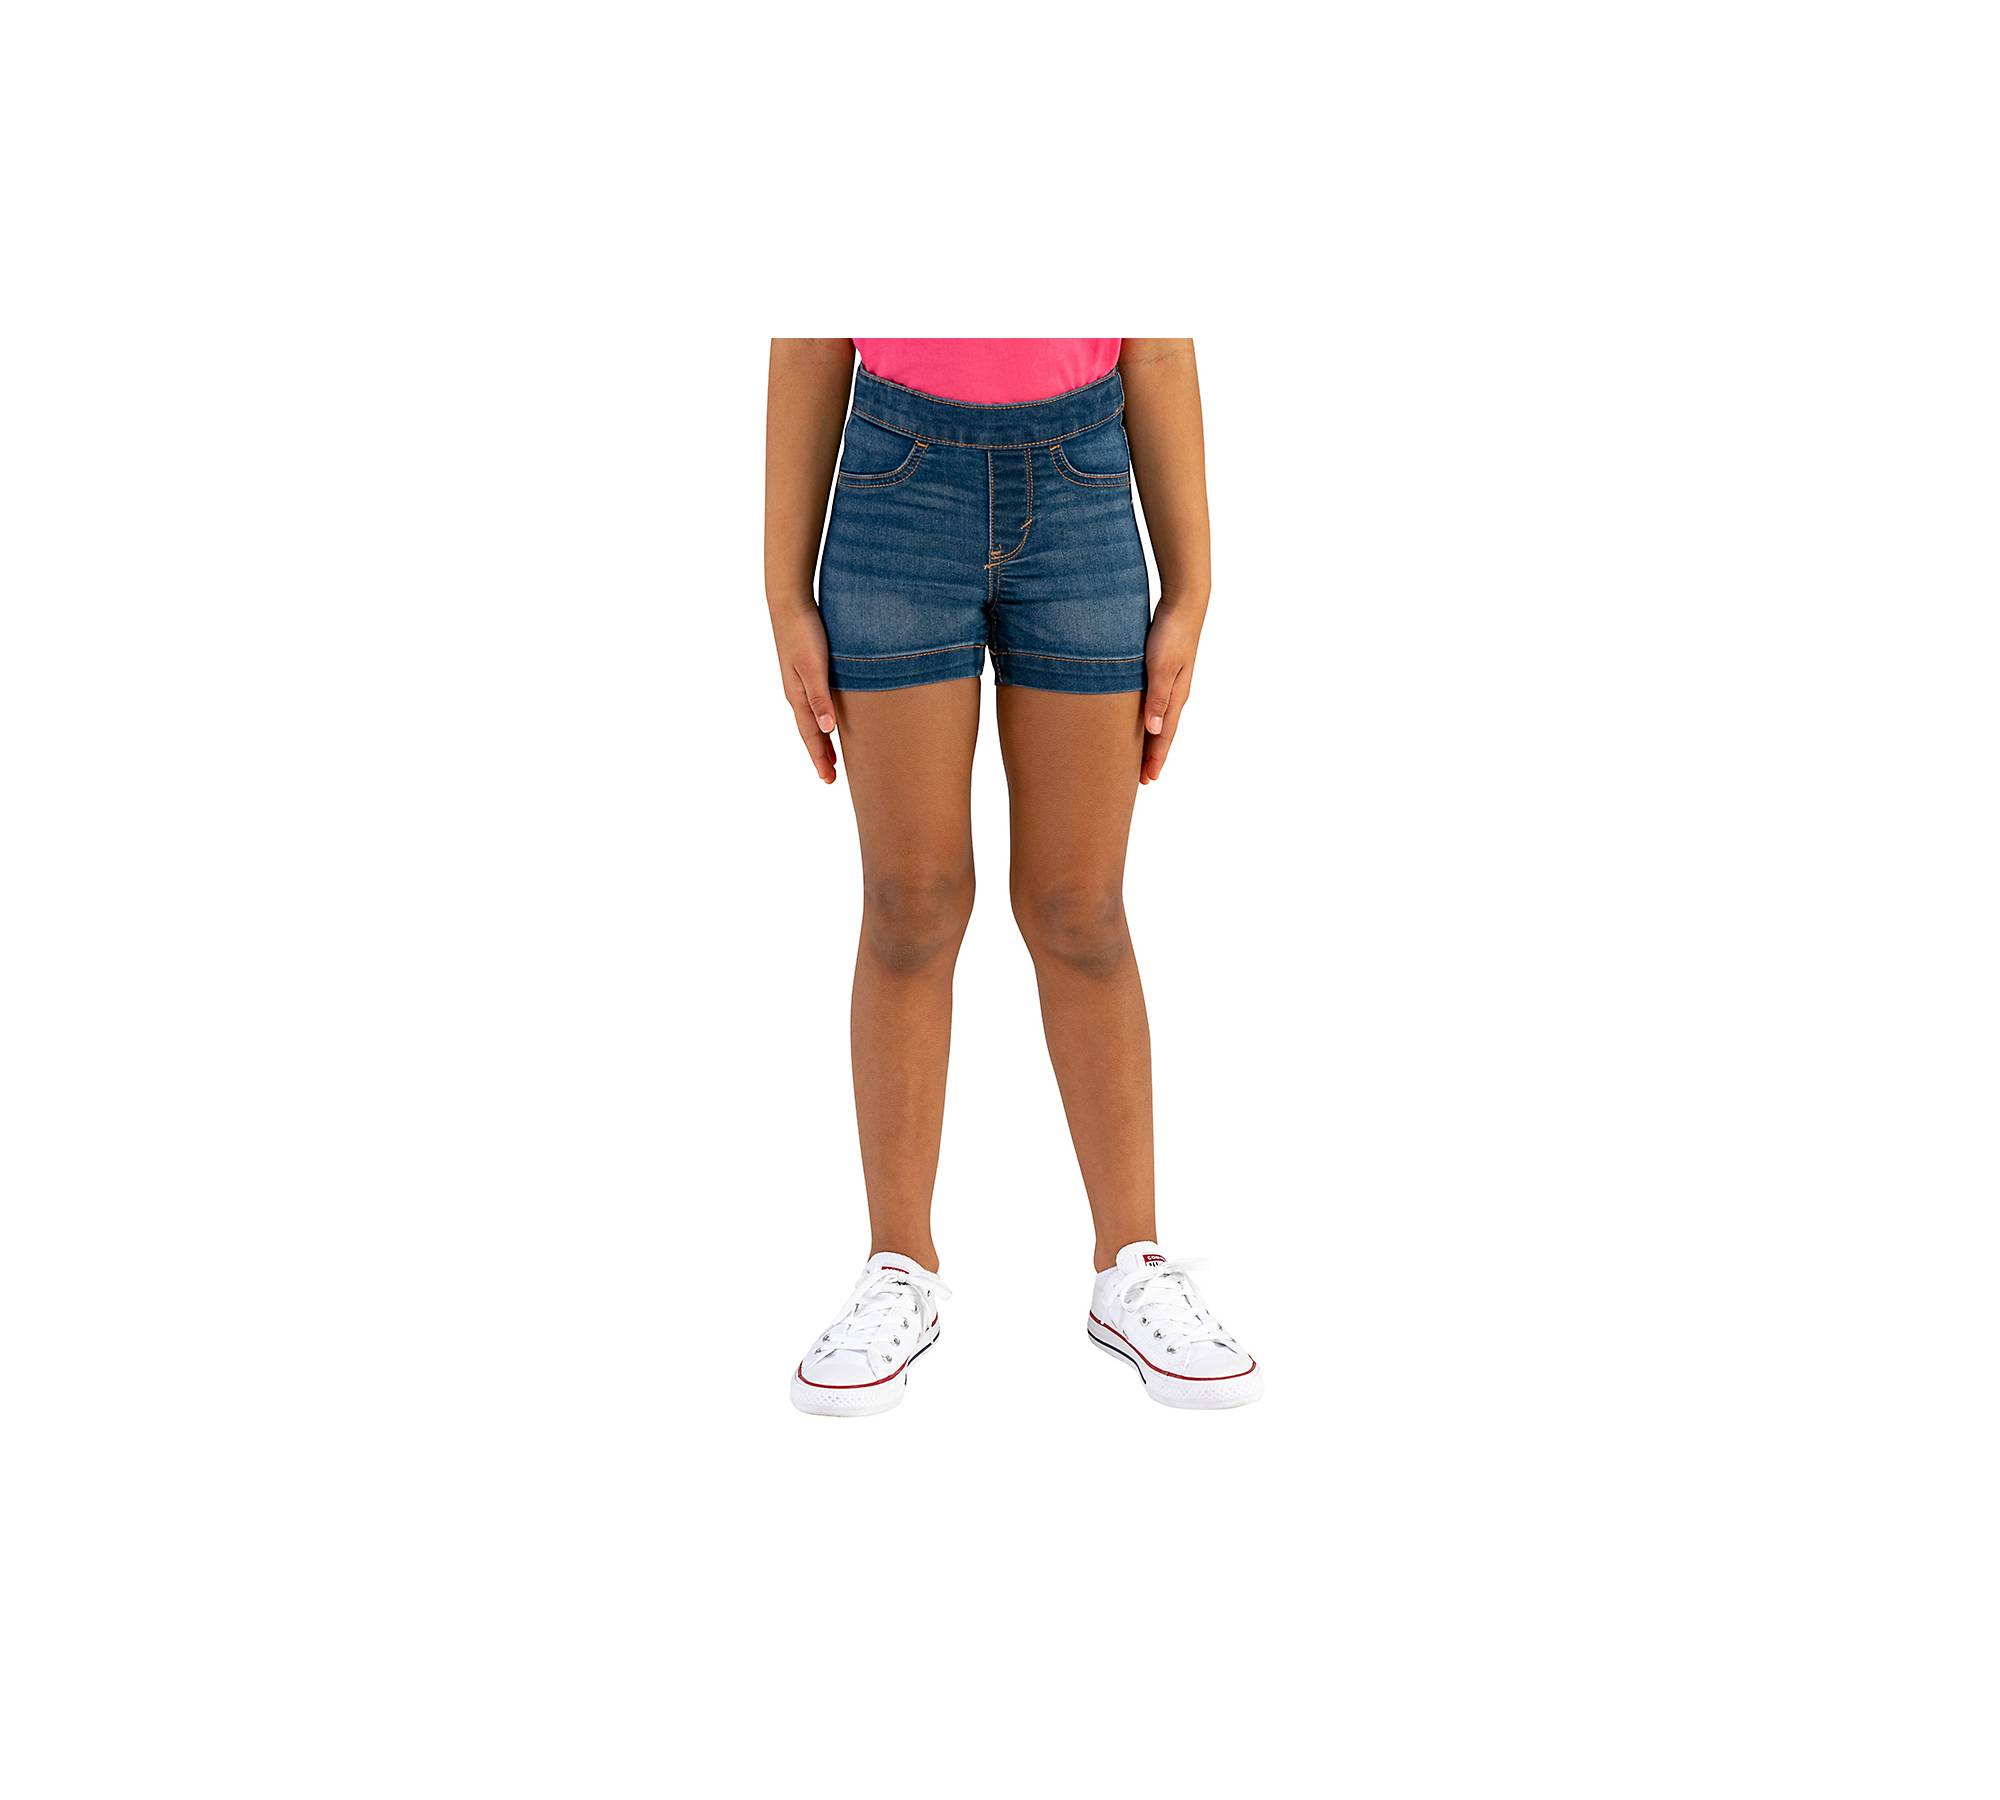 Pull On Shorty Little Girls Shorts 4-6x - Medium Wash